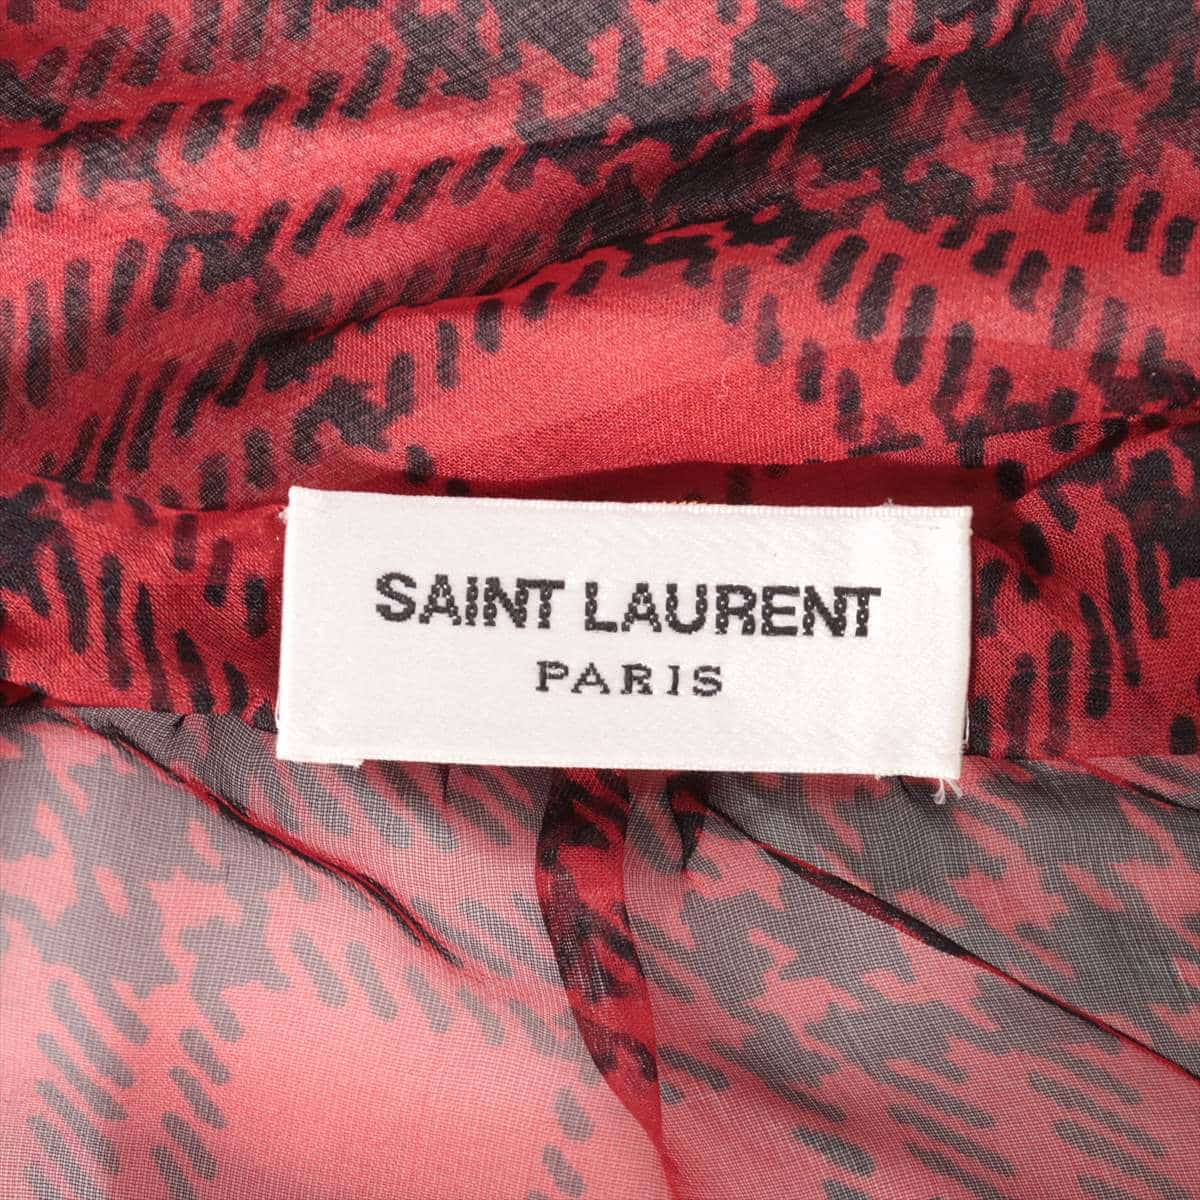 Saint Laurent Paris 20 years Silk Blouse F38 Ladies' Red x Black  641585